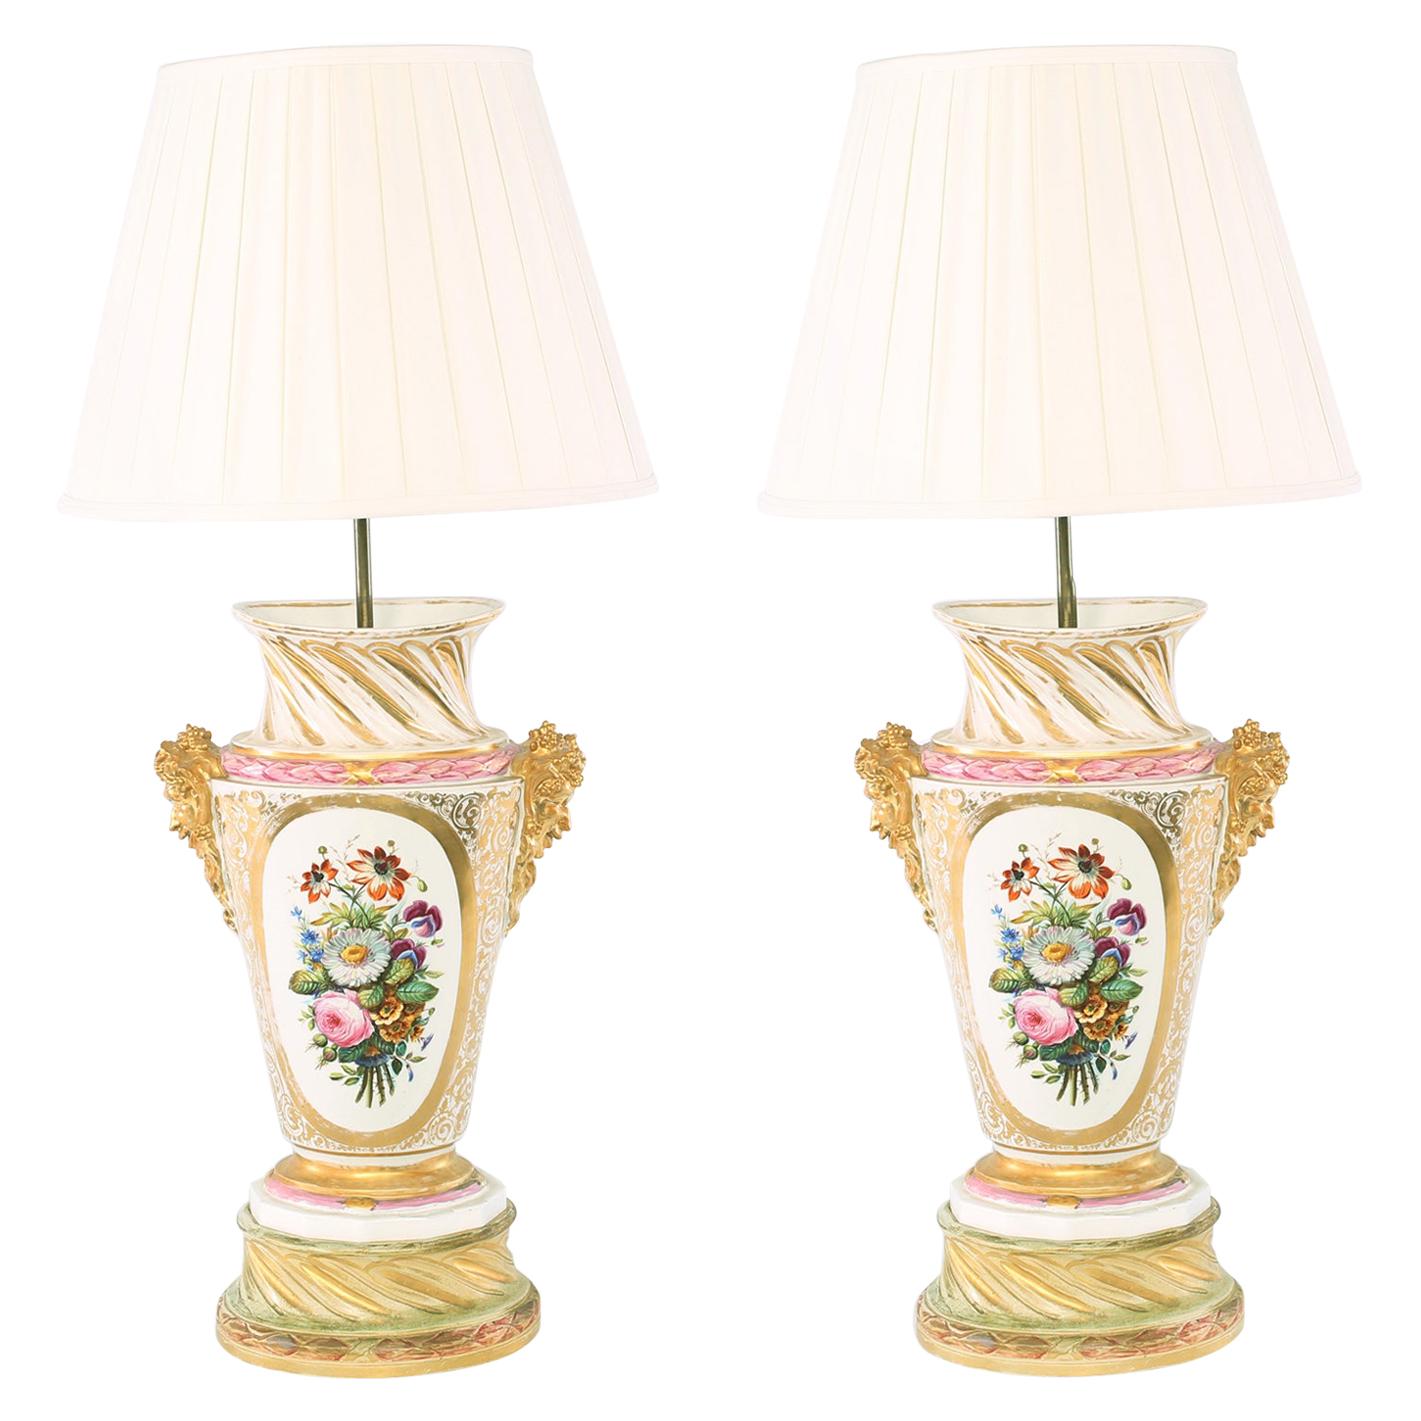 Großes Paar vergoldeter Porzellan-Tischlampen aus dem 19. Jahrhundert